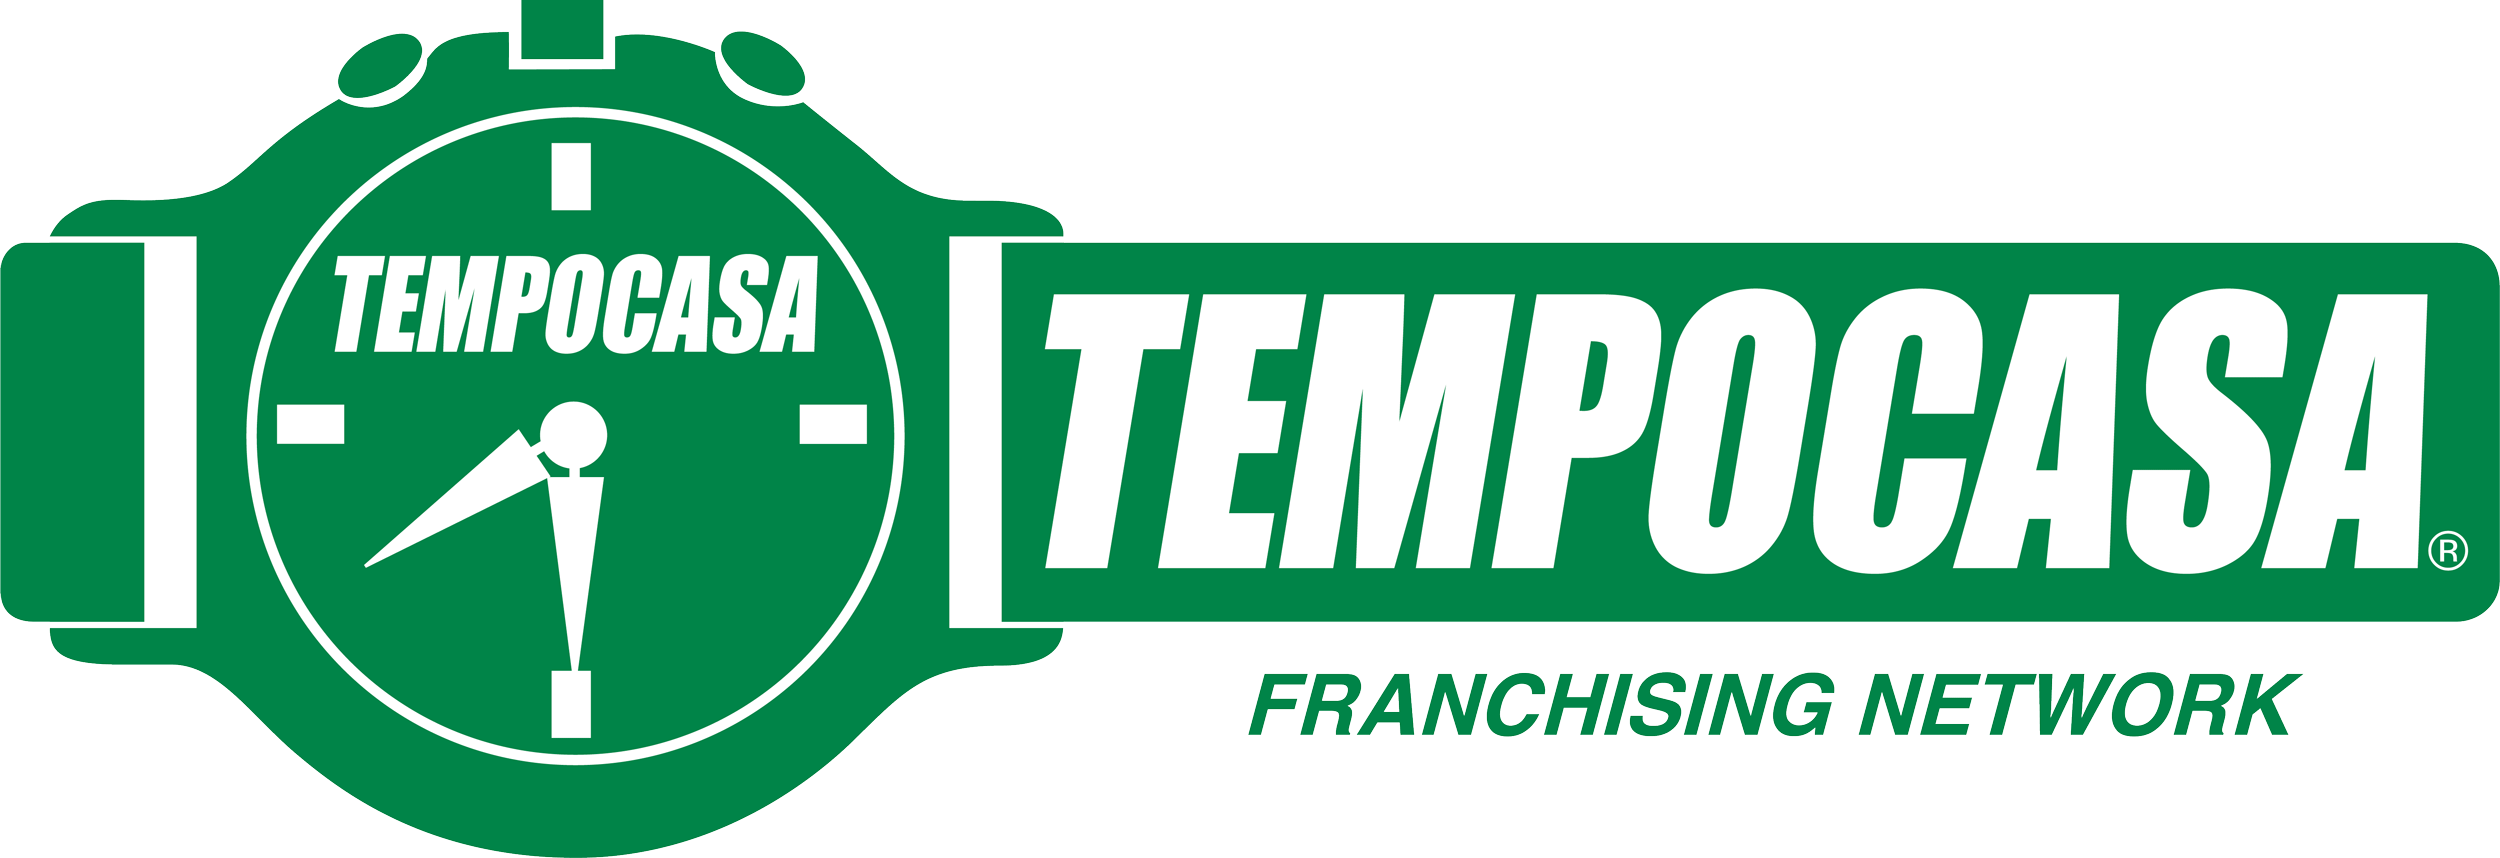 Tempocasa Maranosulpanaro - Tempocasa